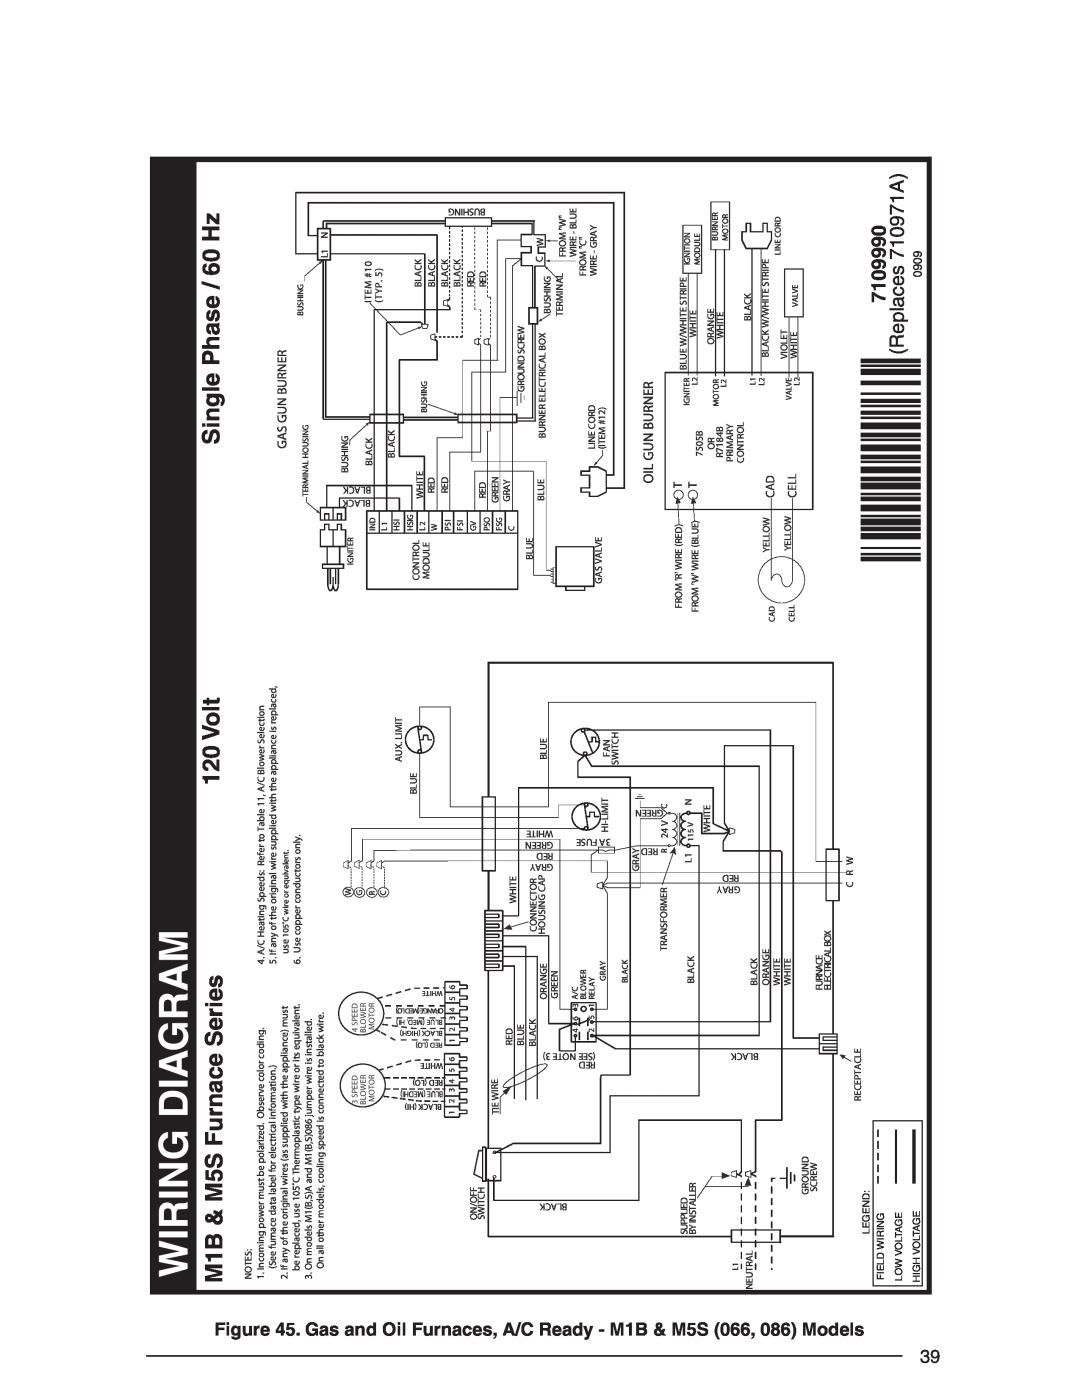 Nordyne AND M5S M1B & M5S Furnace Series, Single Phase / 60 Hz, Volt, Wiring Diagram, 7109990, Gas, Models, Oil Gun Burner 